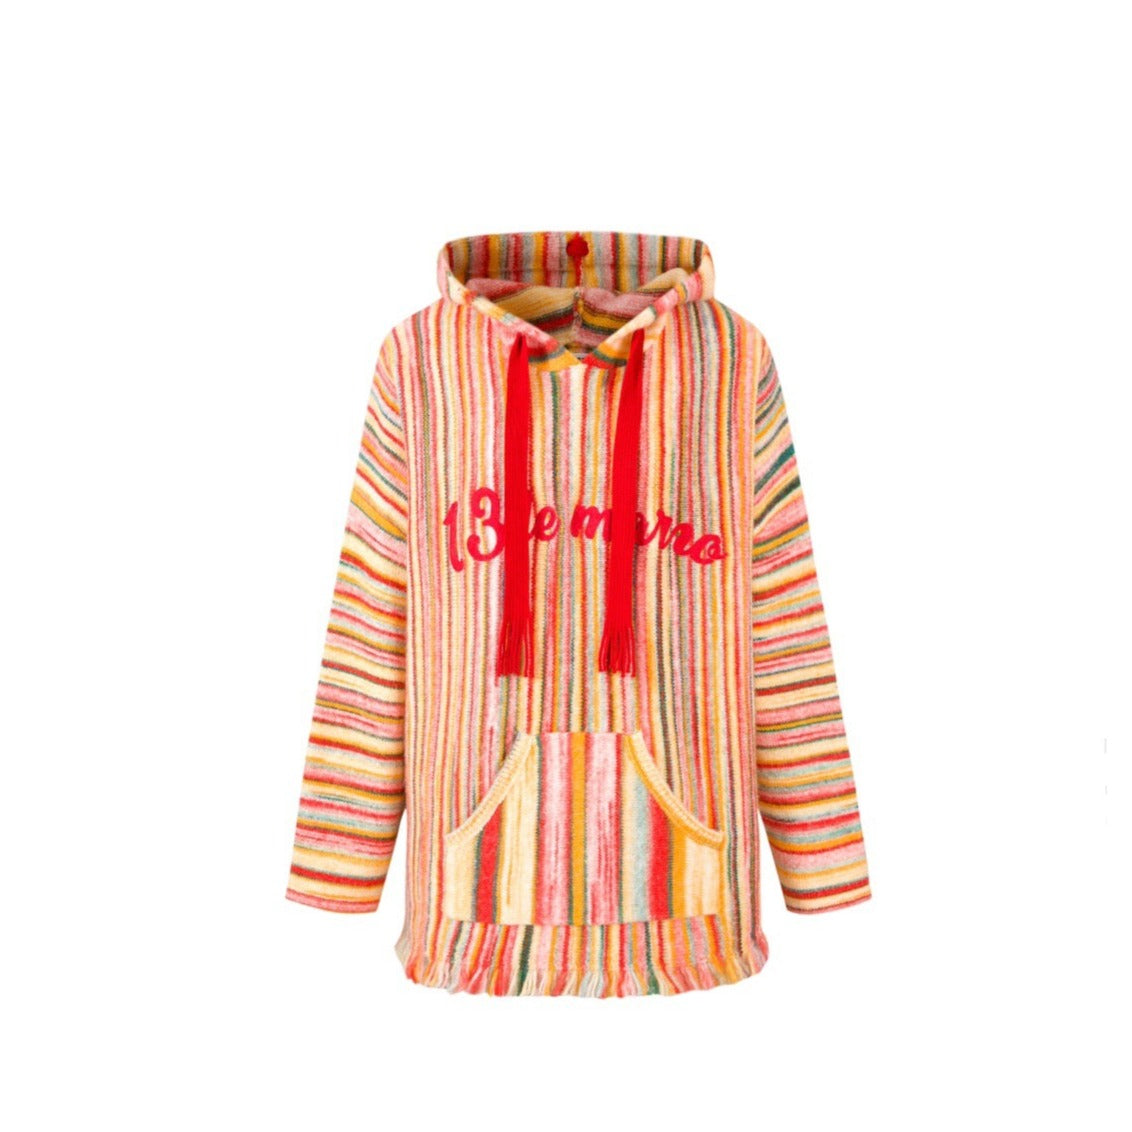 13DE MARZO Color Lines Knit Sweater Apricot Gelato